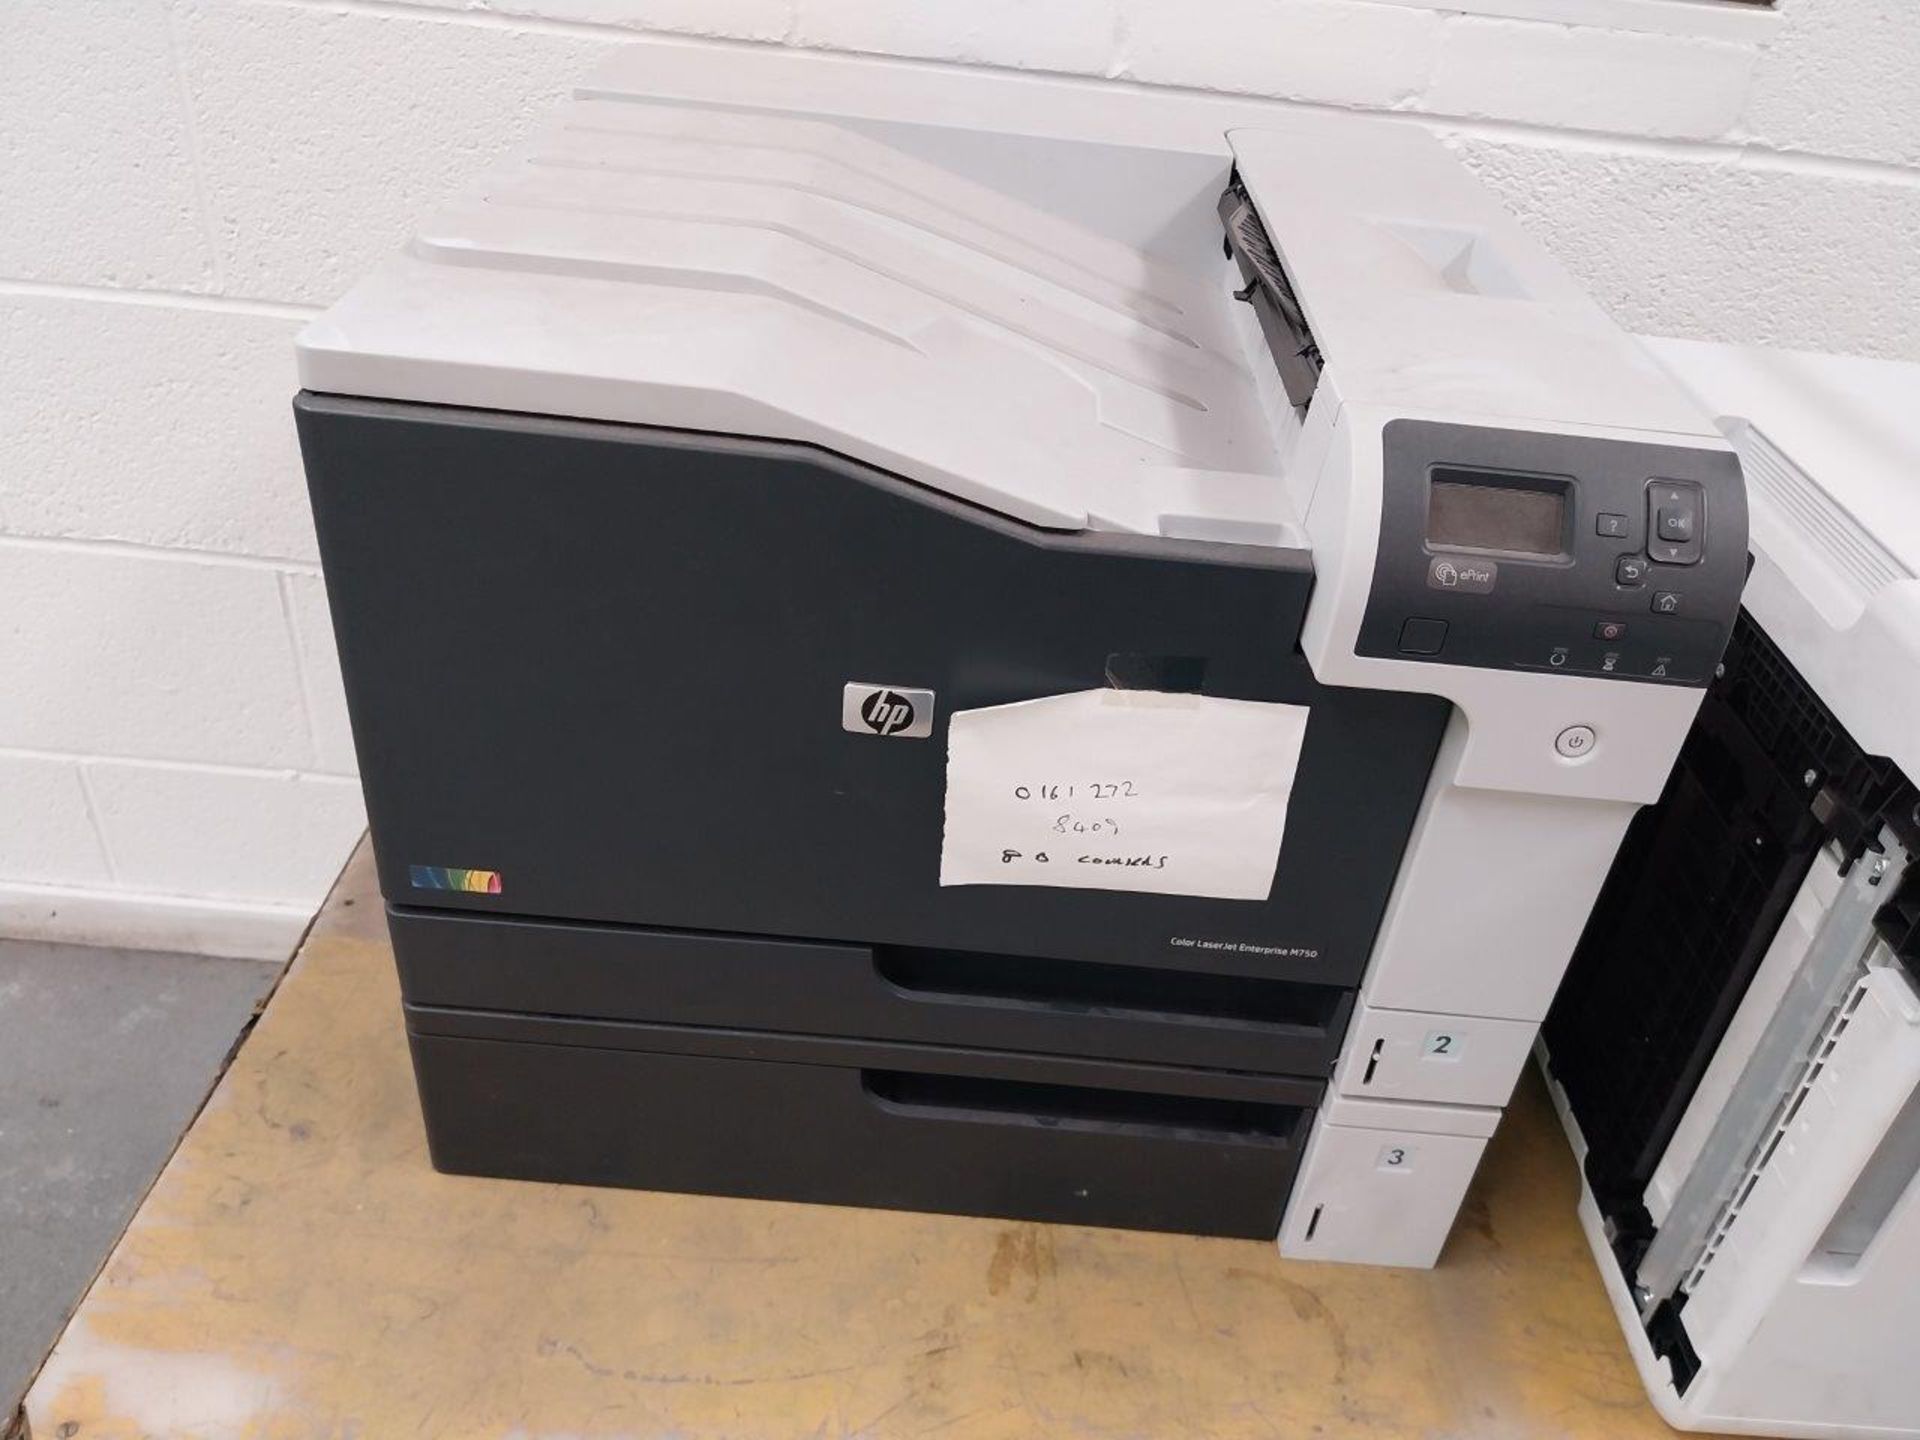 HP Color laserjet enterprise M750 printer